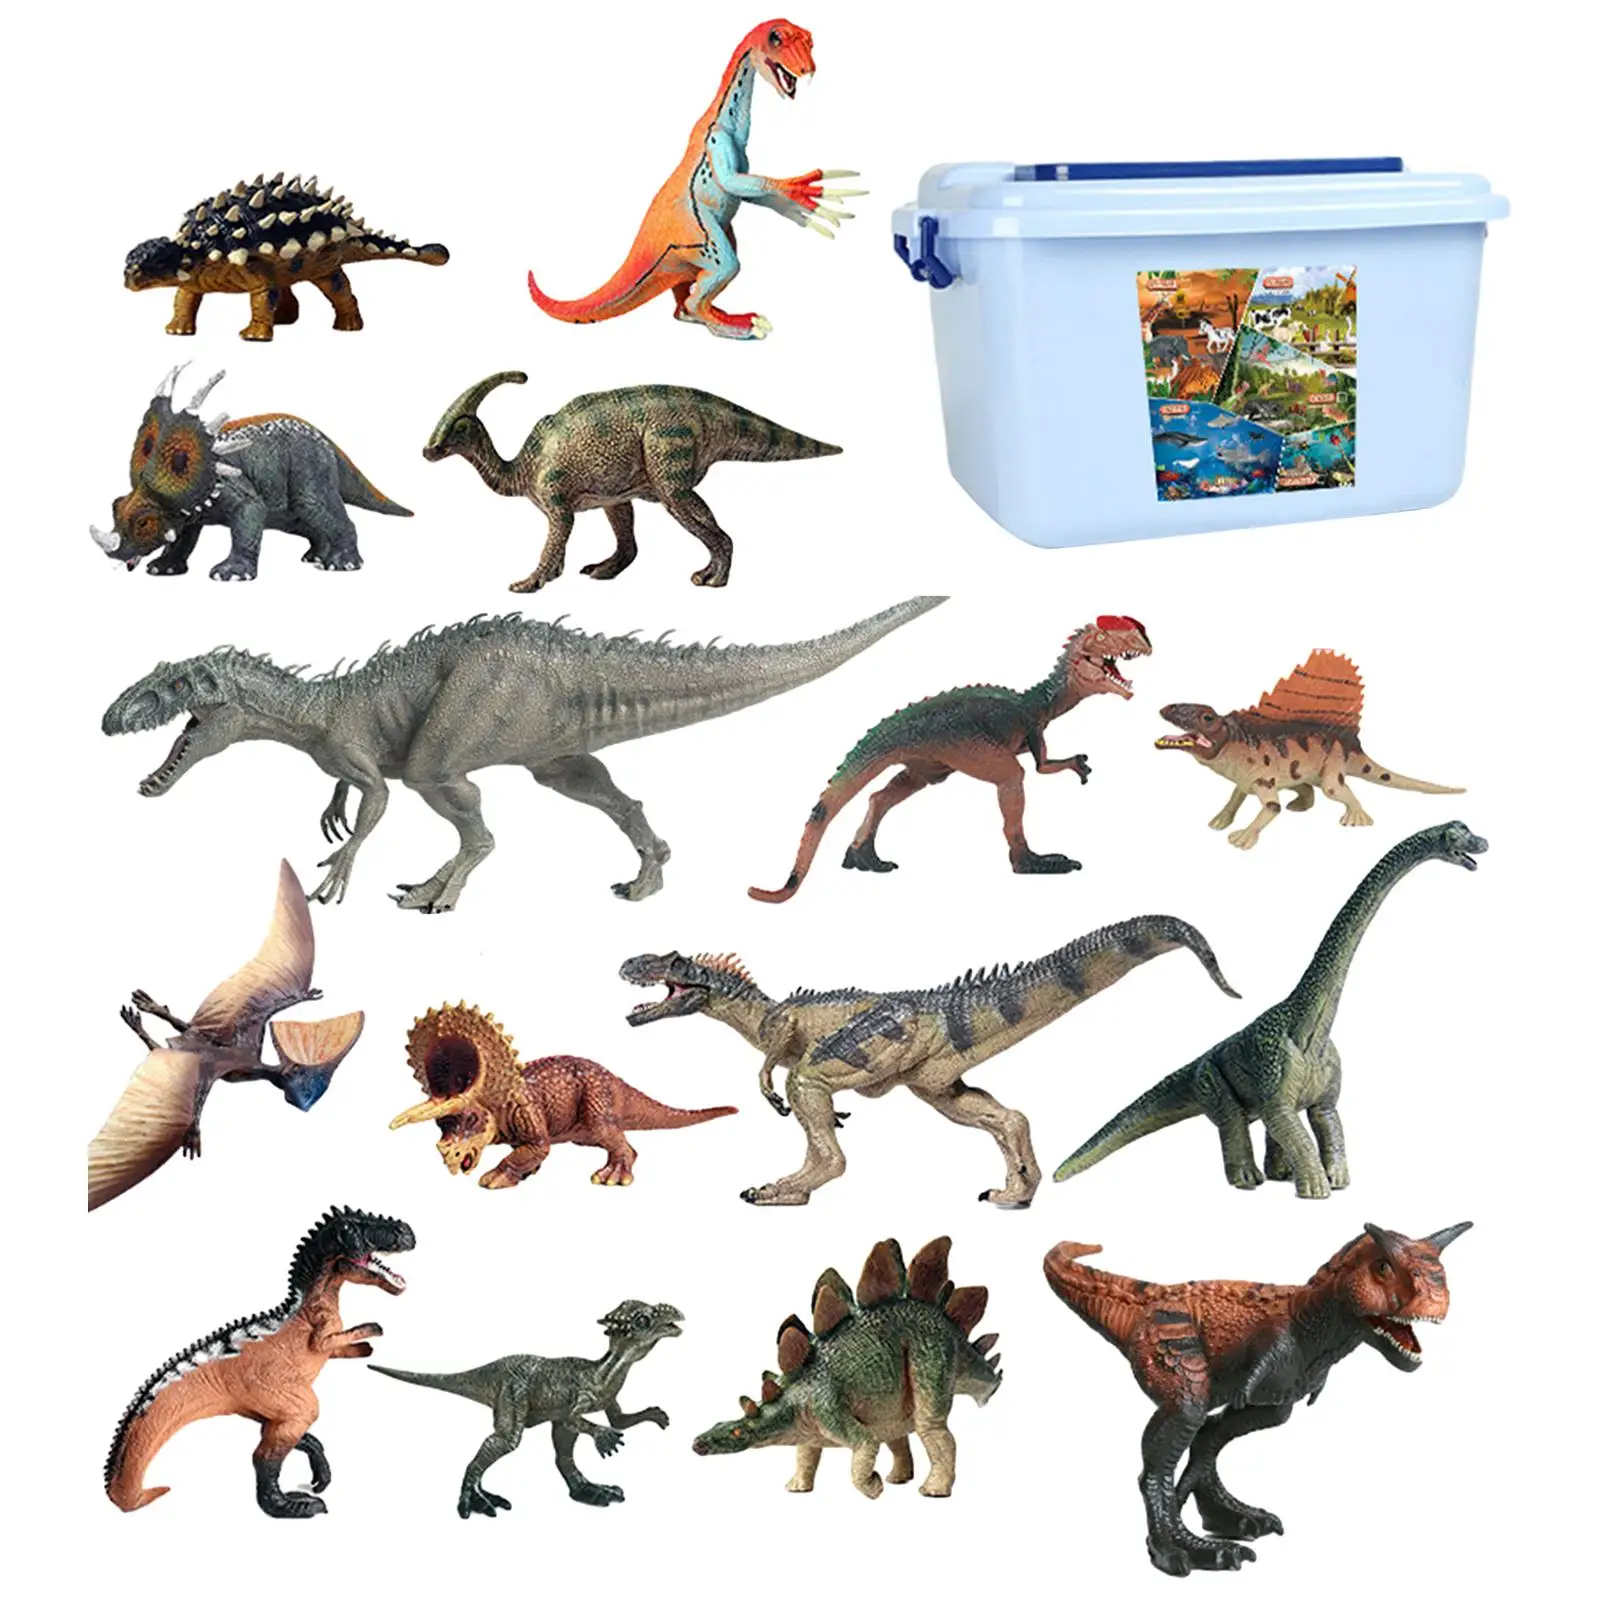 15x Kids Dinosaur Toys Wildlife Animal Figurine for Party Favors Christmas